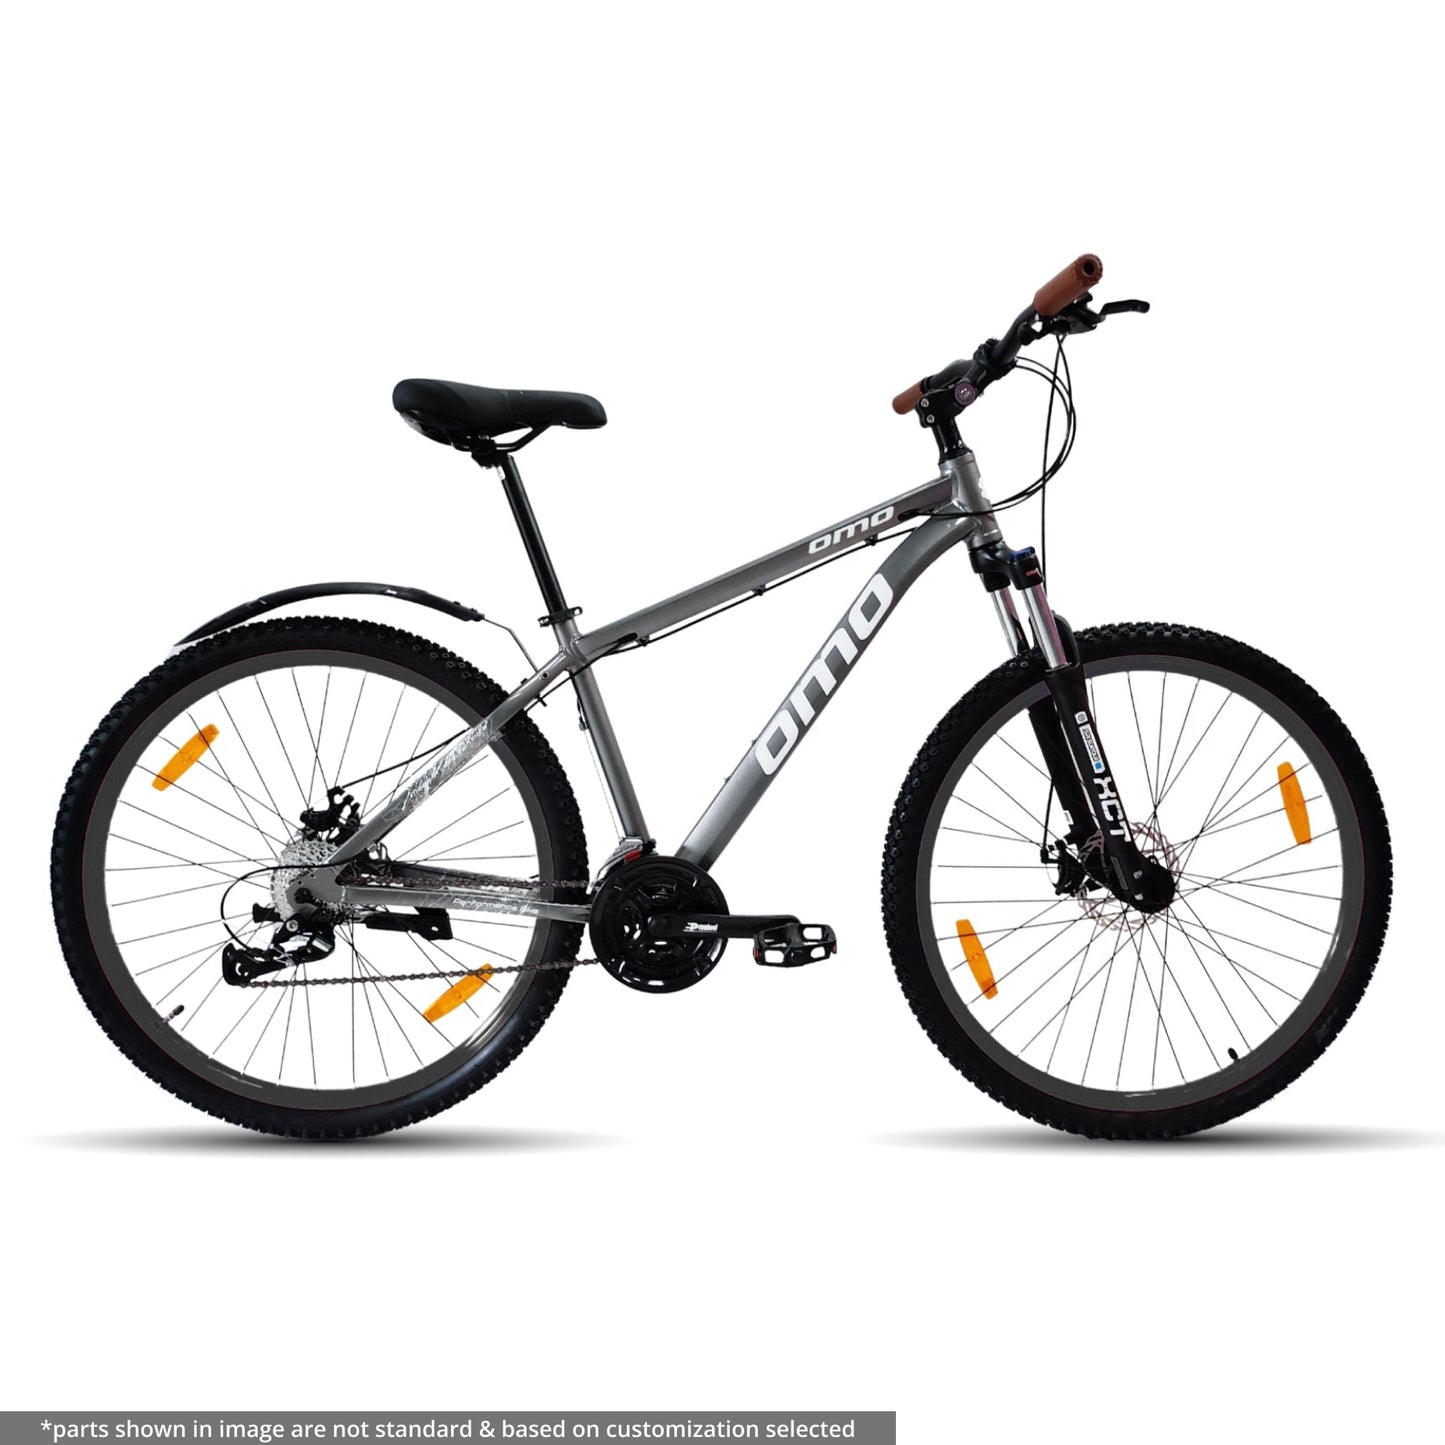 omobikes zojila 3x9 alivio Alloy MTB 29er mountain bike with hydraulic brakes suntour suspension grey black color side view